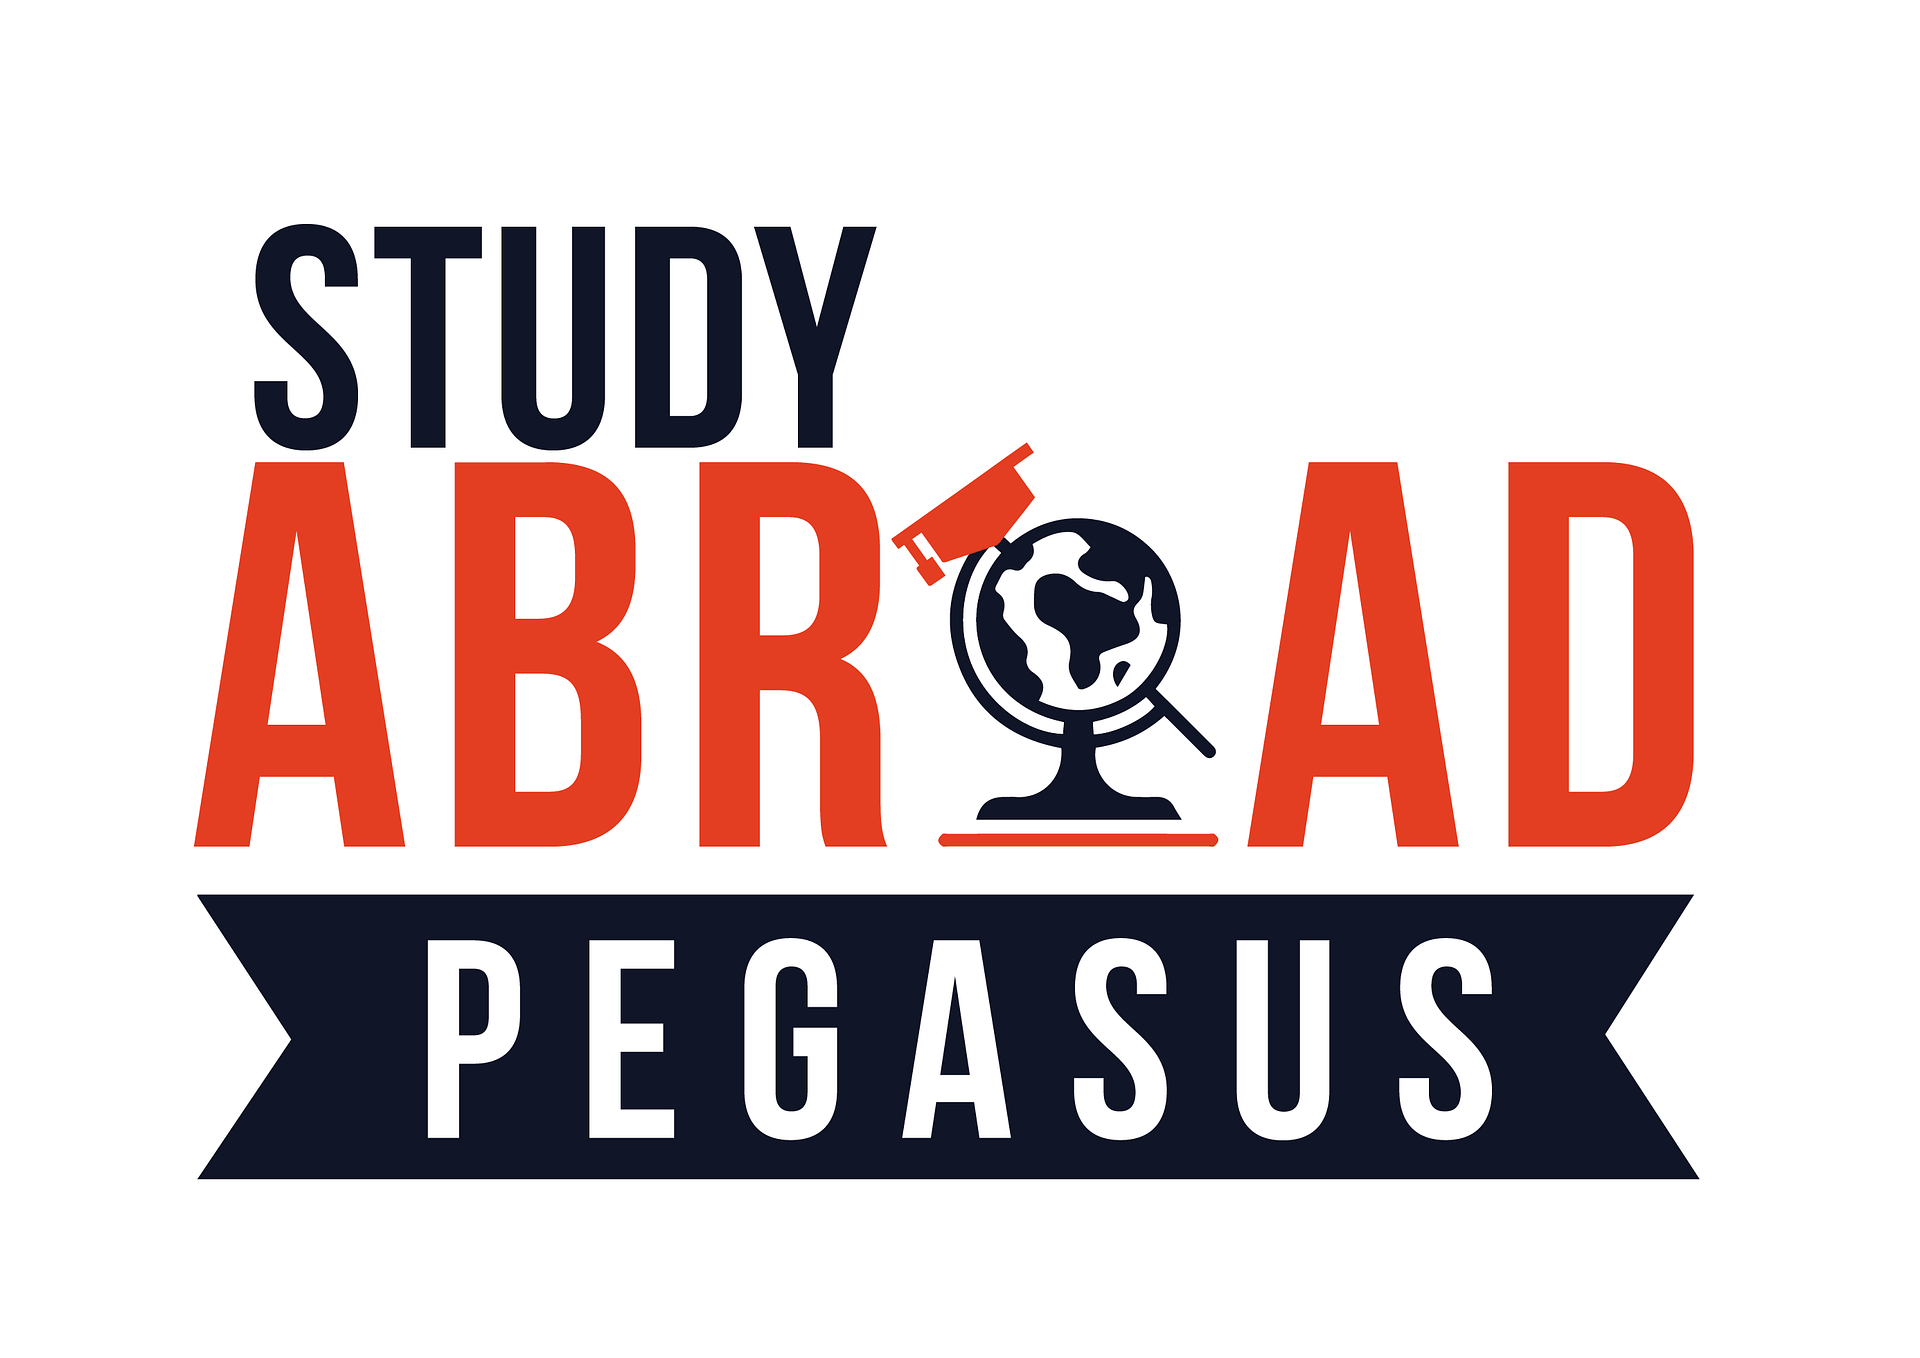 STUDY ABROAD PEGASUS